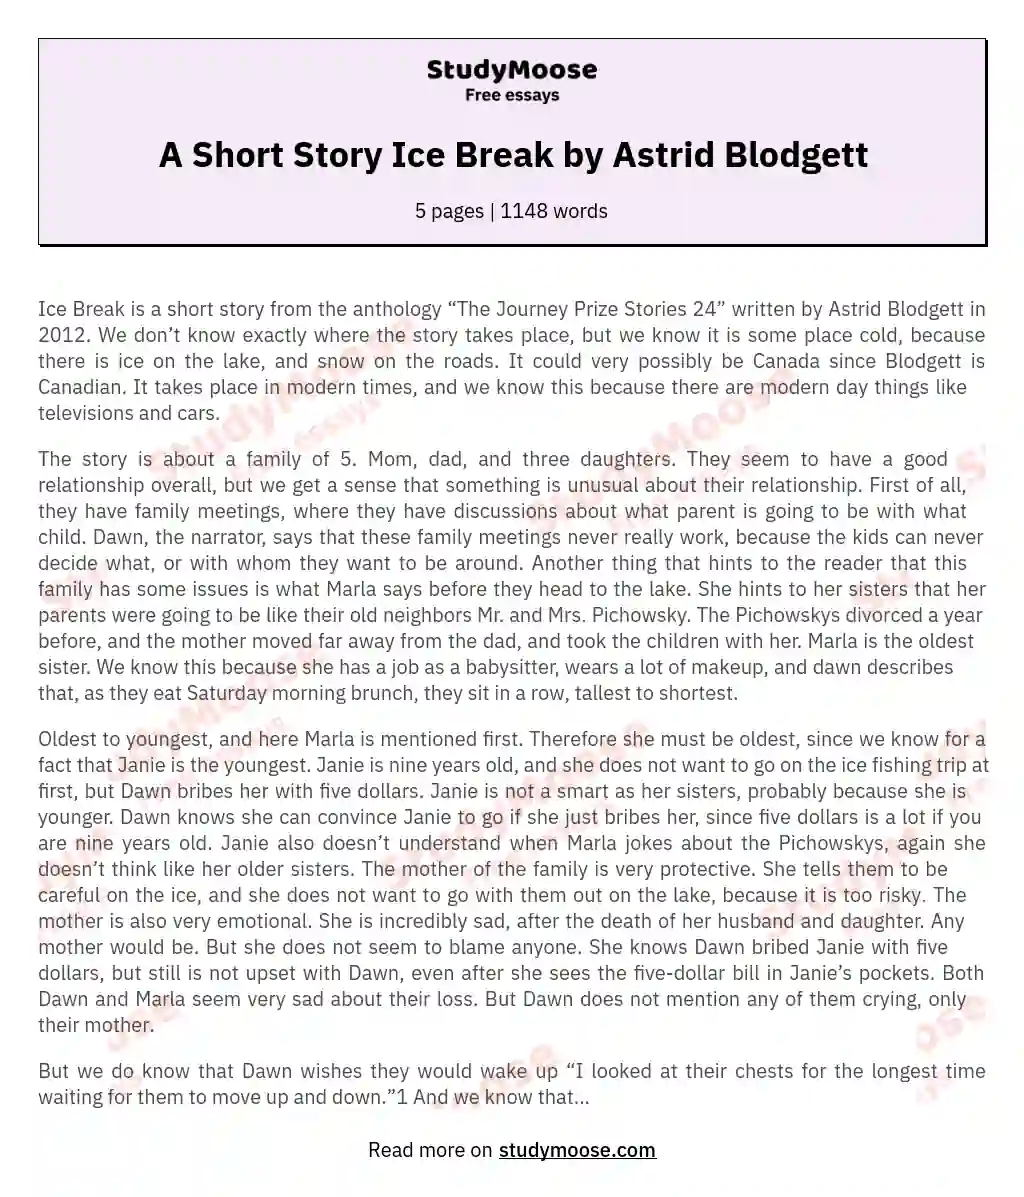 A Short Story Ice Break by Astrid Blodgett essay